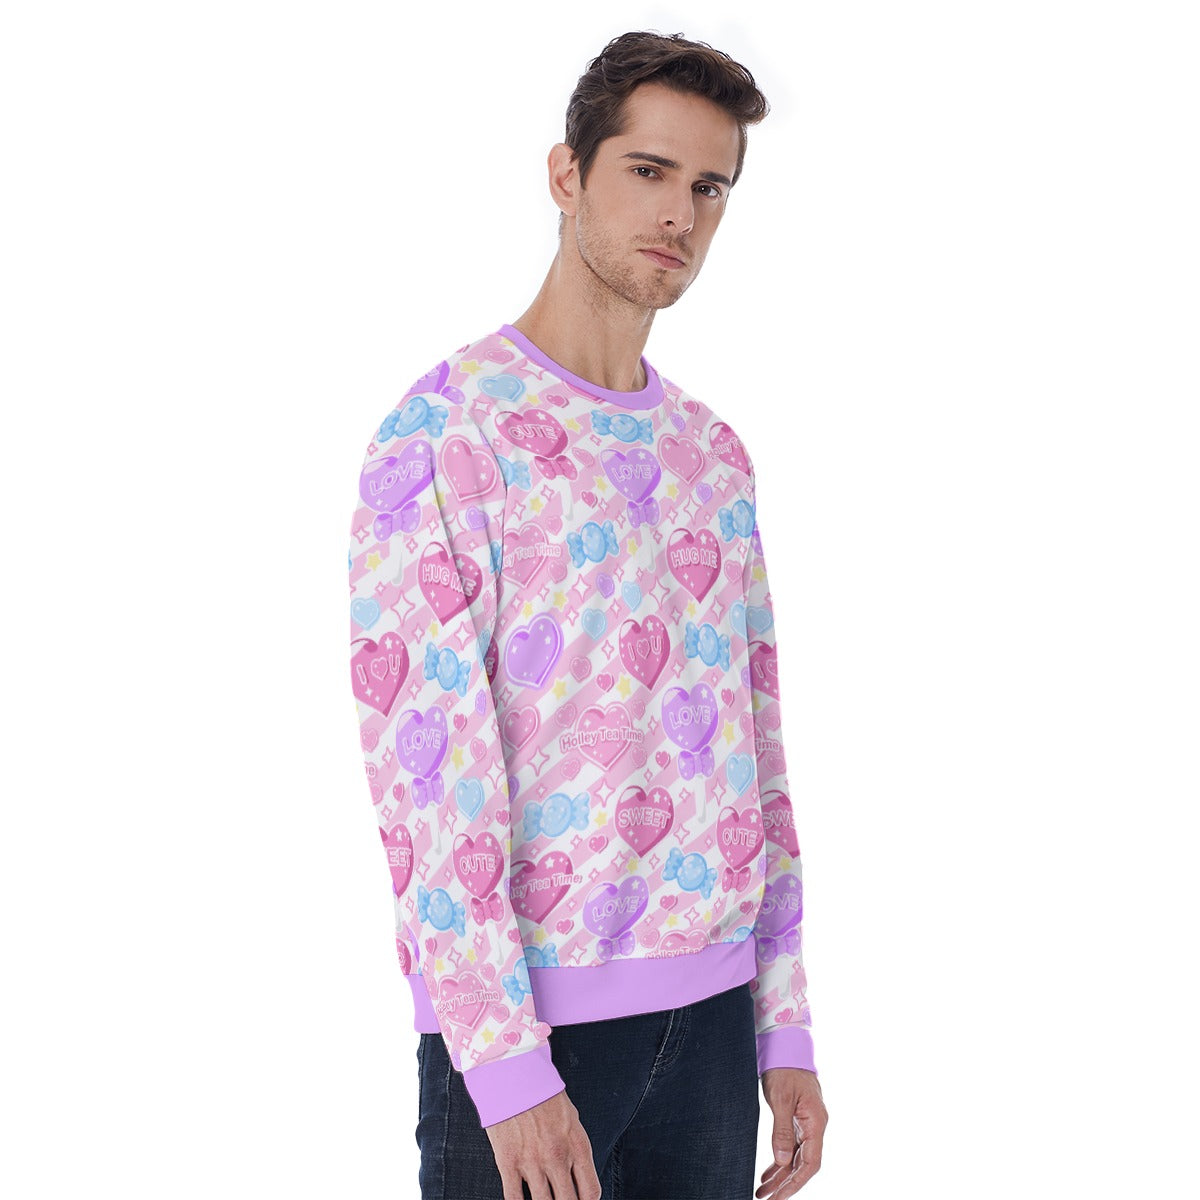 Candy Love Hearts (Colorful Cutie) Men's Sweatshirt